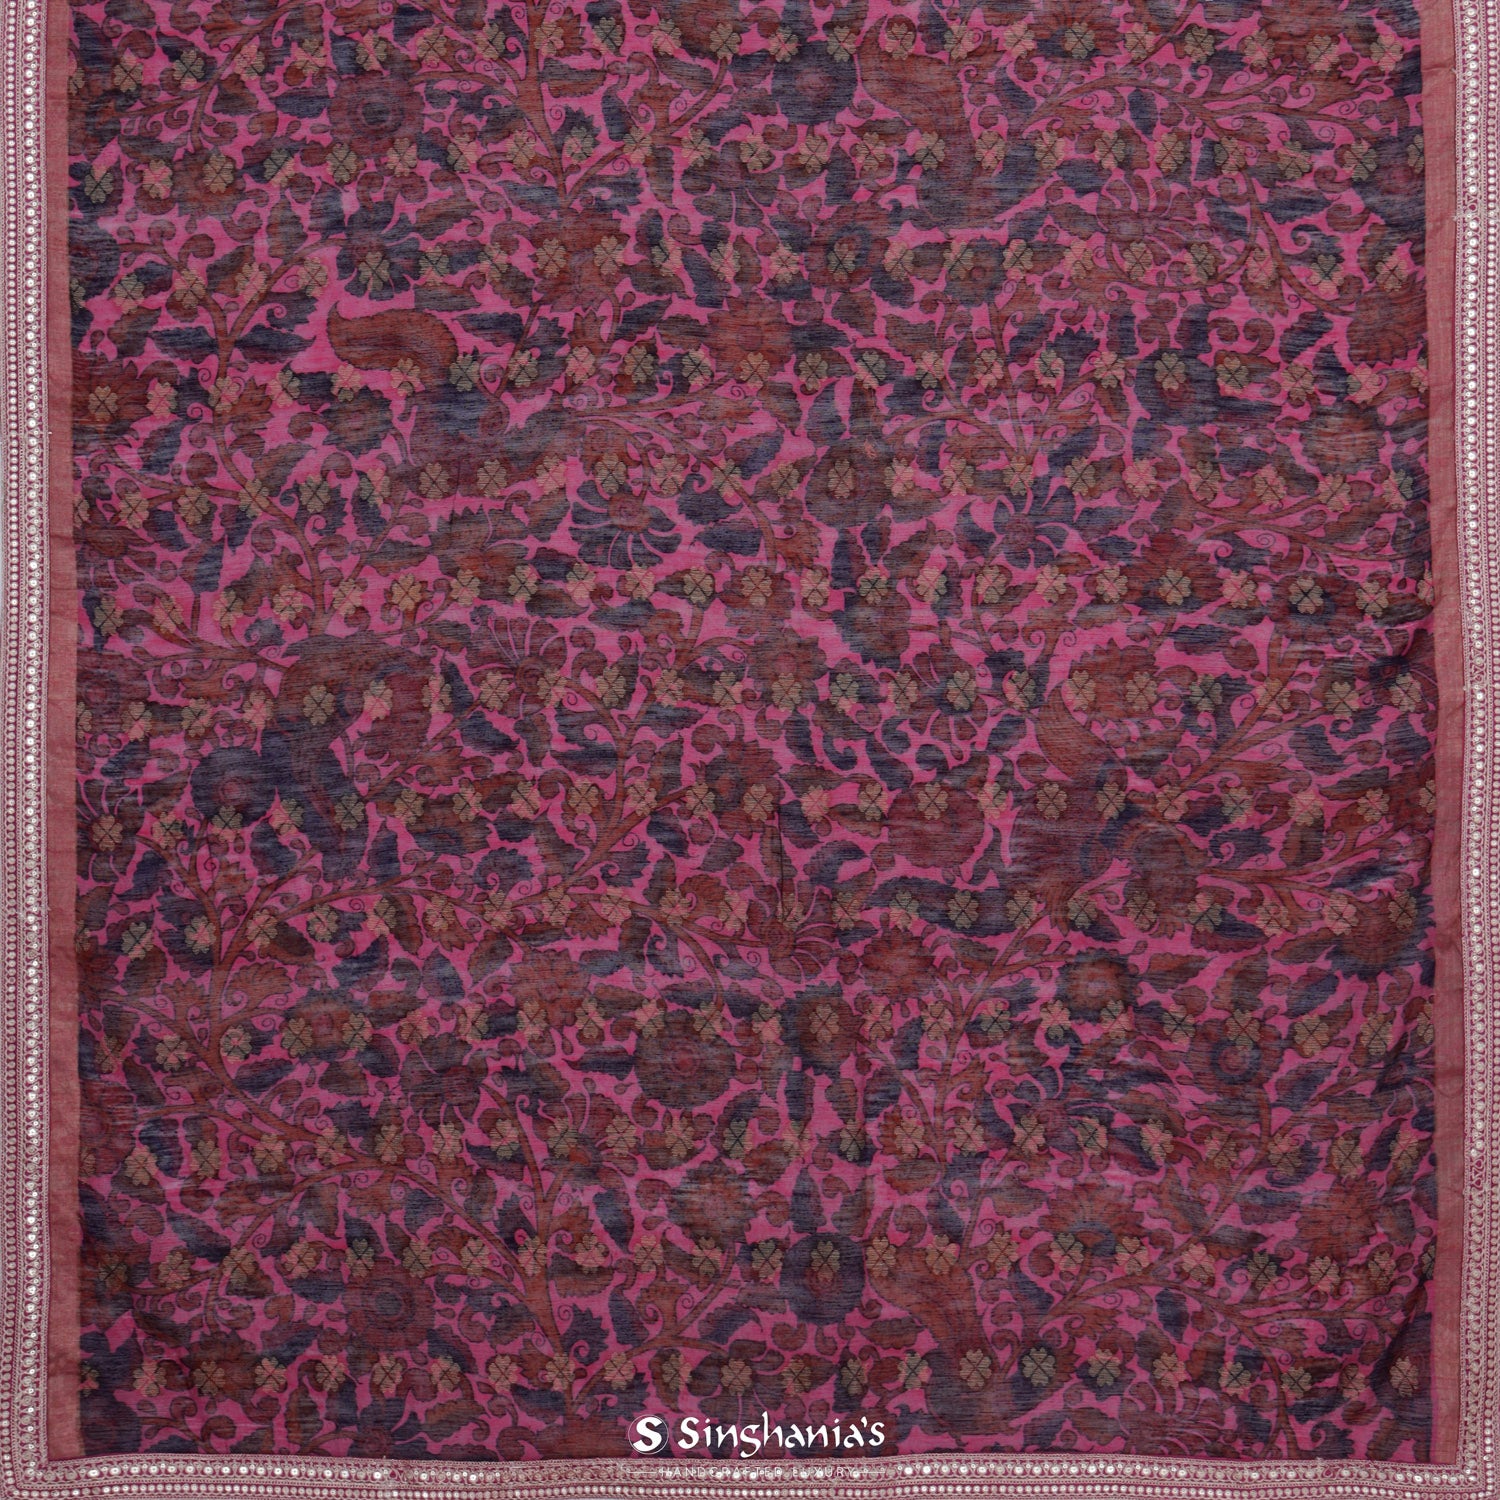 Grapefruit Pink Printed Matka Saree With Floral Pattern